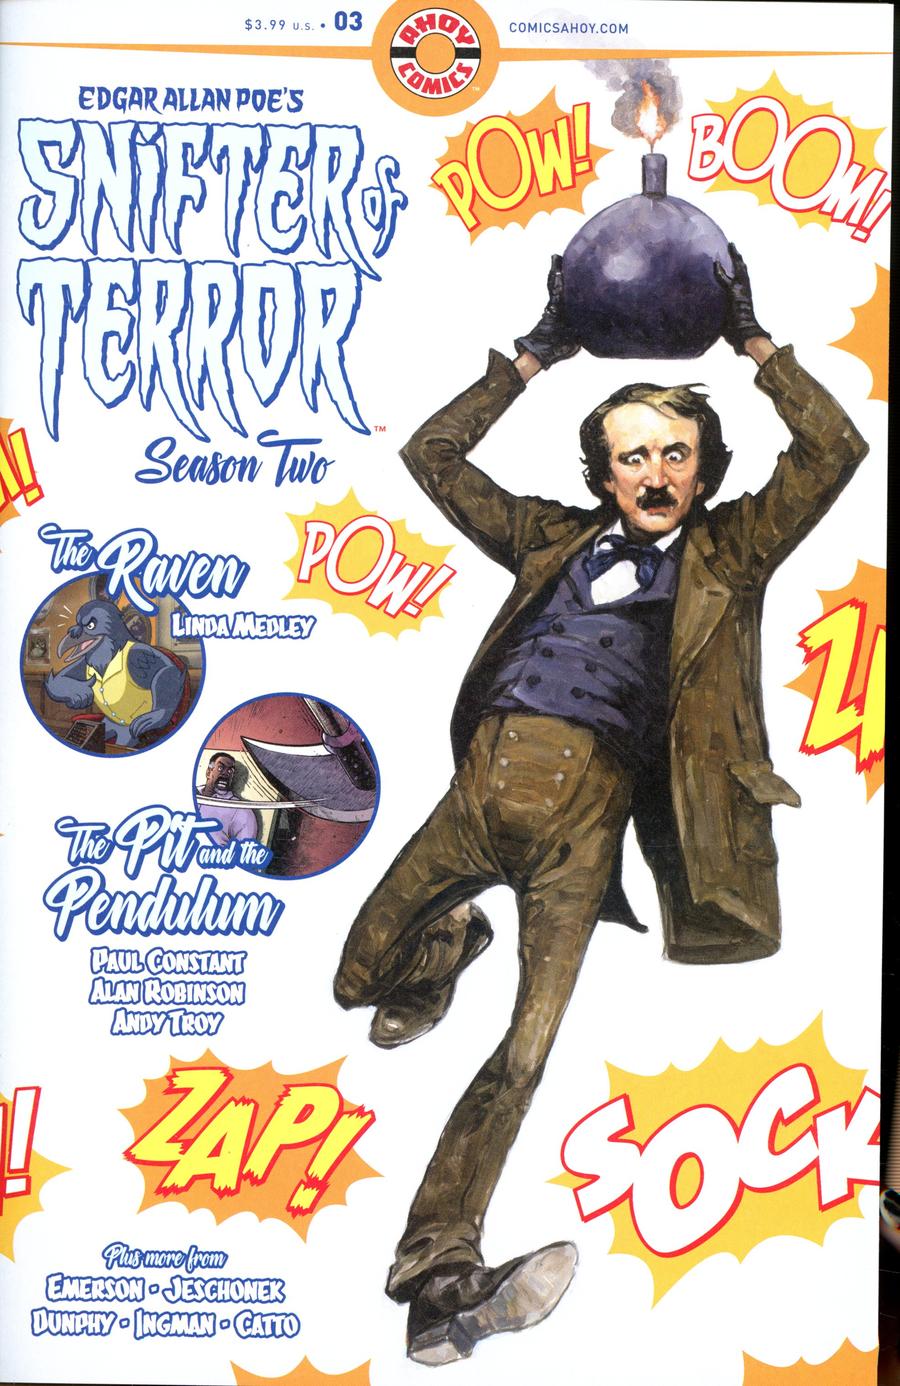 Edgar Allan Poes Snifter Of Terror Season 2 #3